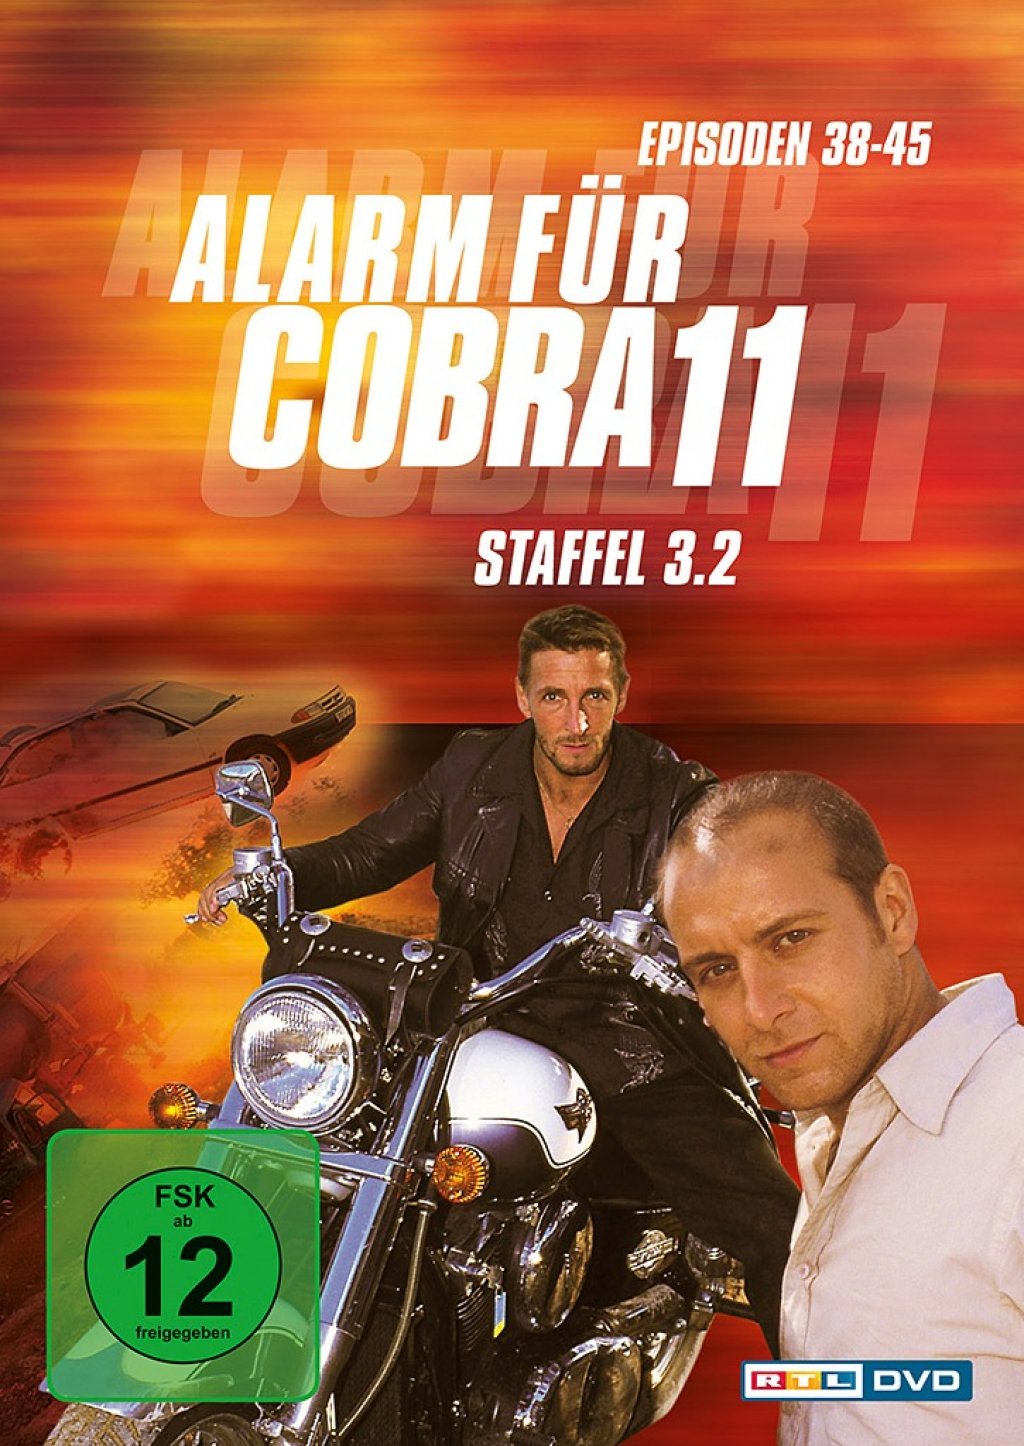 Alarm f 252 r Cobra 11 Staffel 3 2 Amaray DVD 